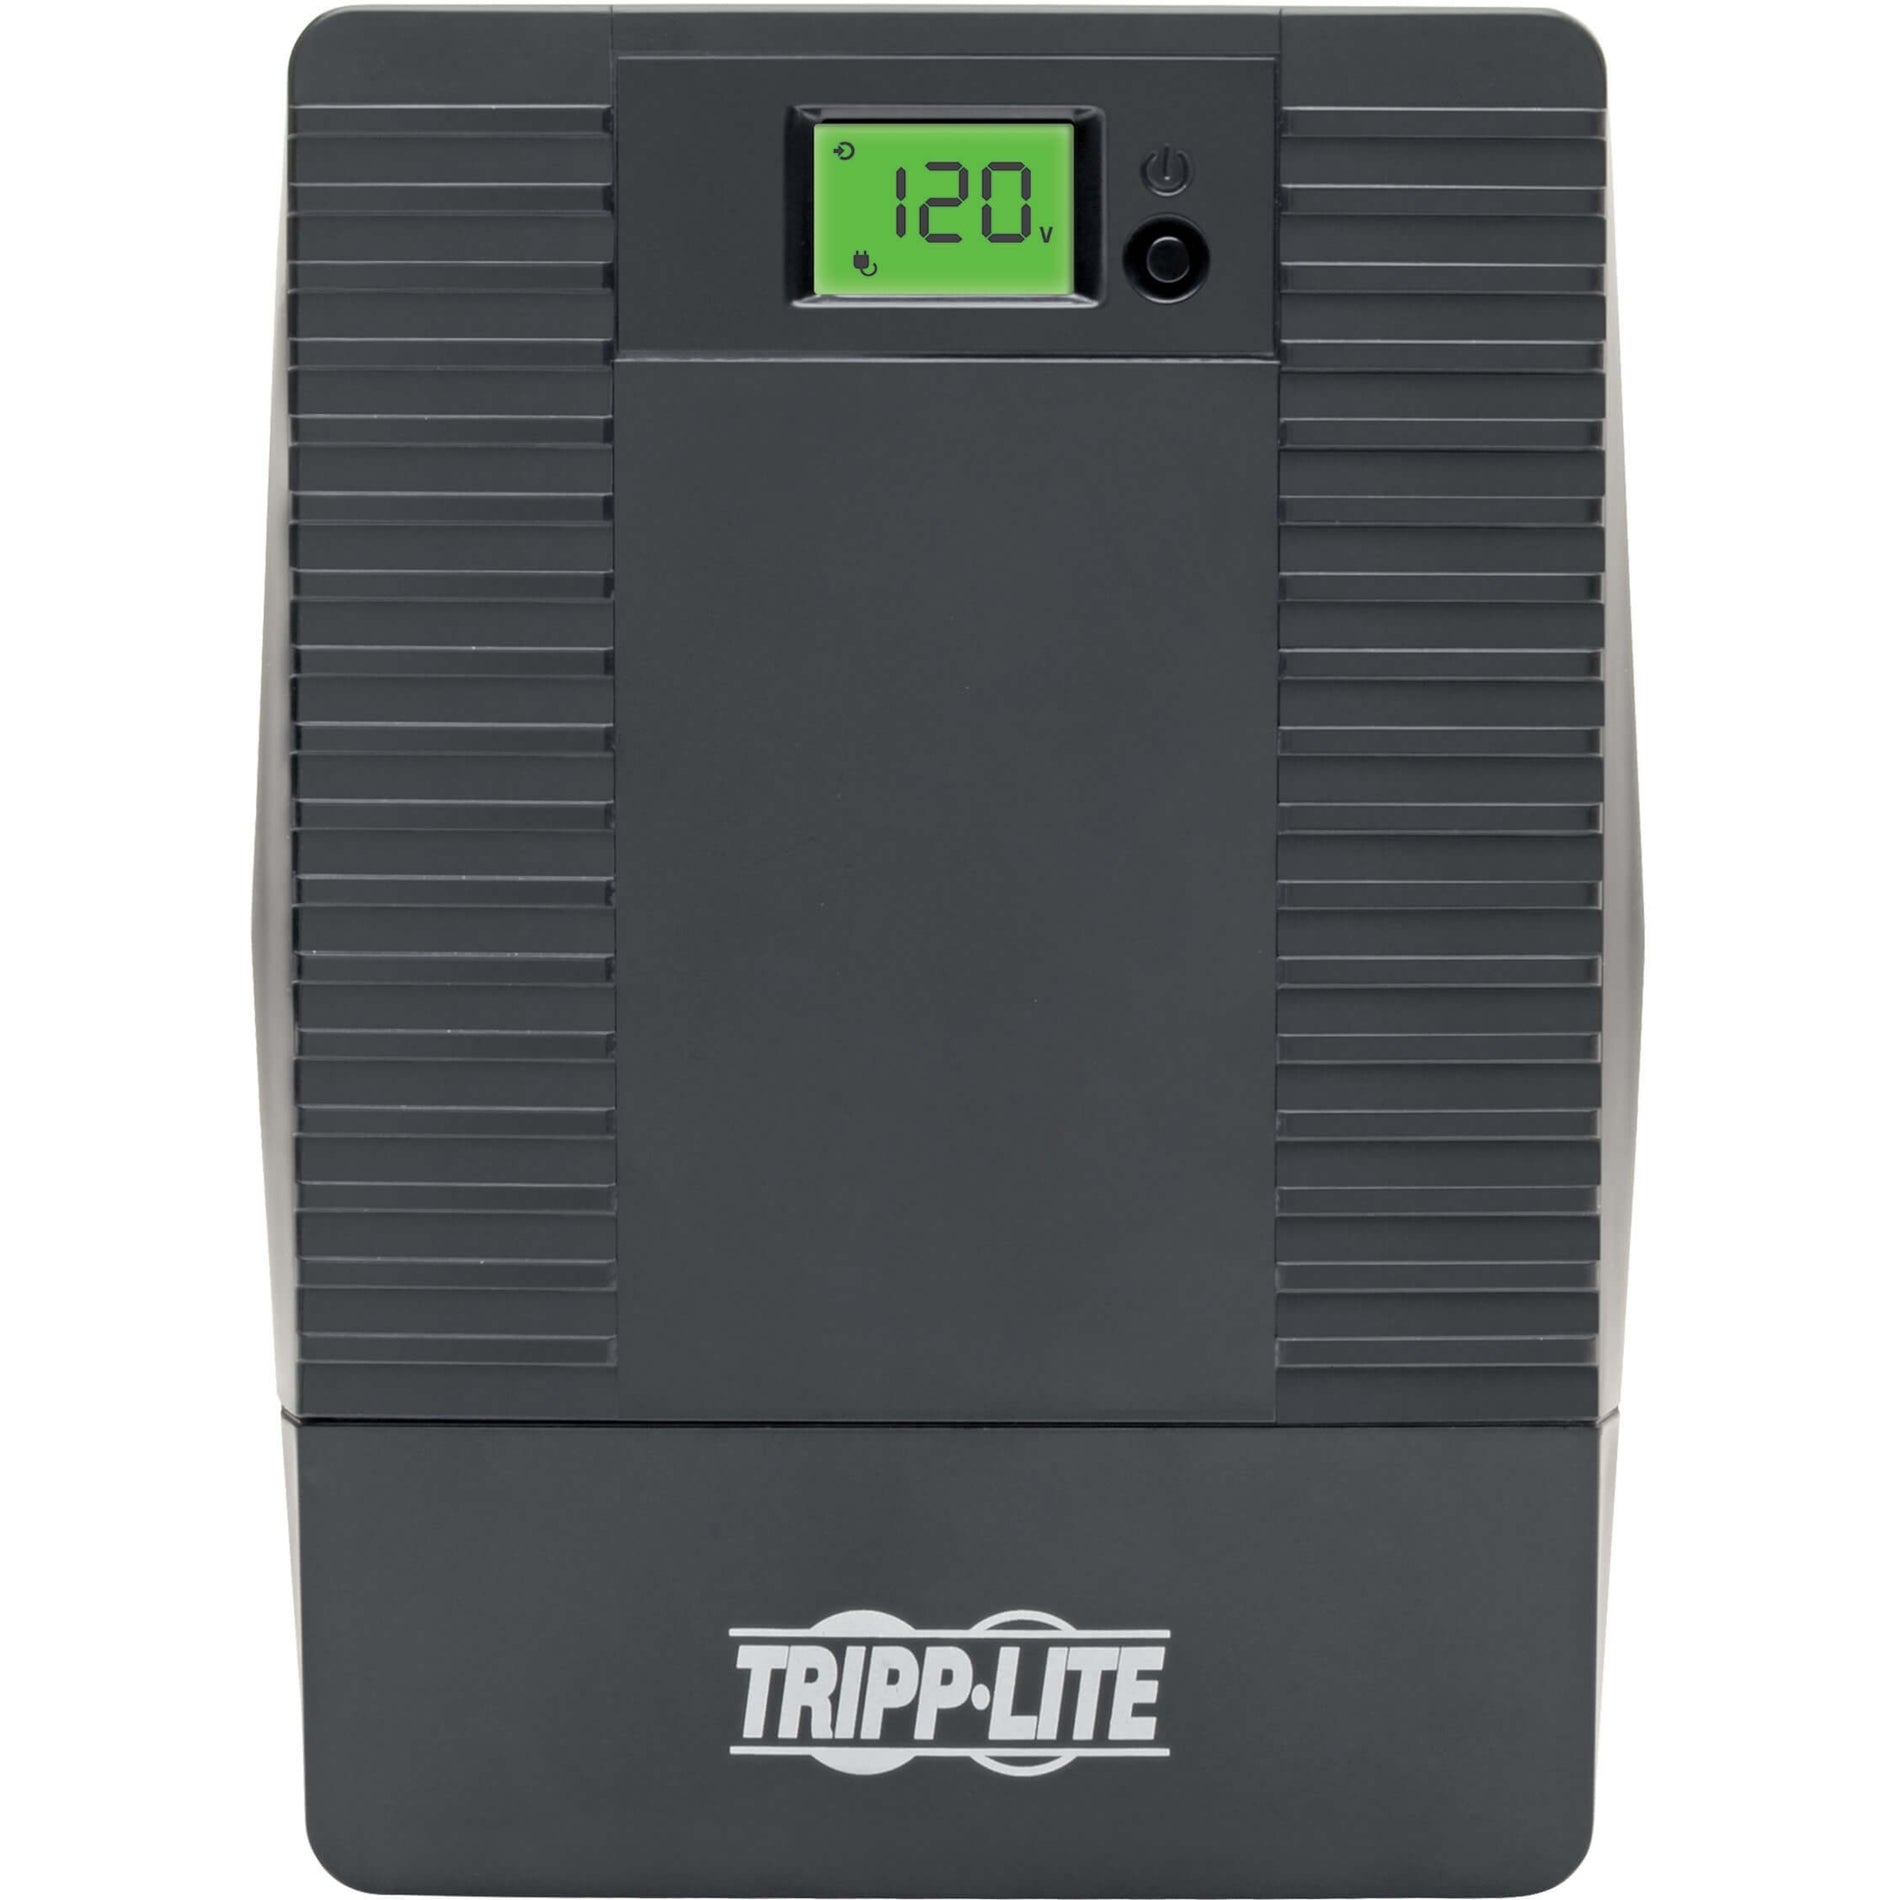 Tripp Lite OMNISMART700TSU 700VA Tower UPS, 480W Line Interactive, 3 Year Warranty, LCD Display